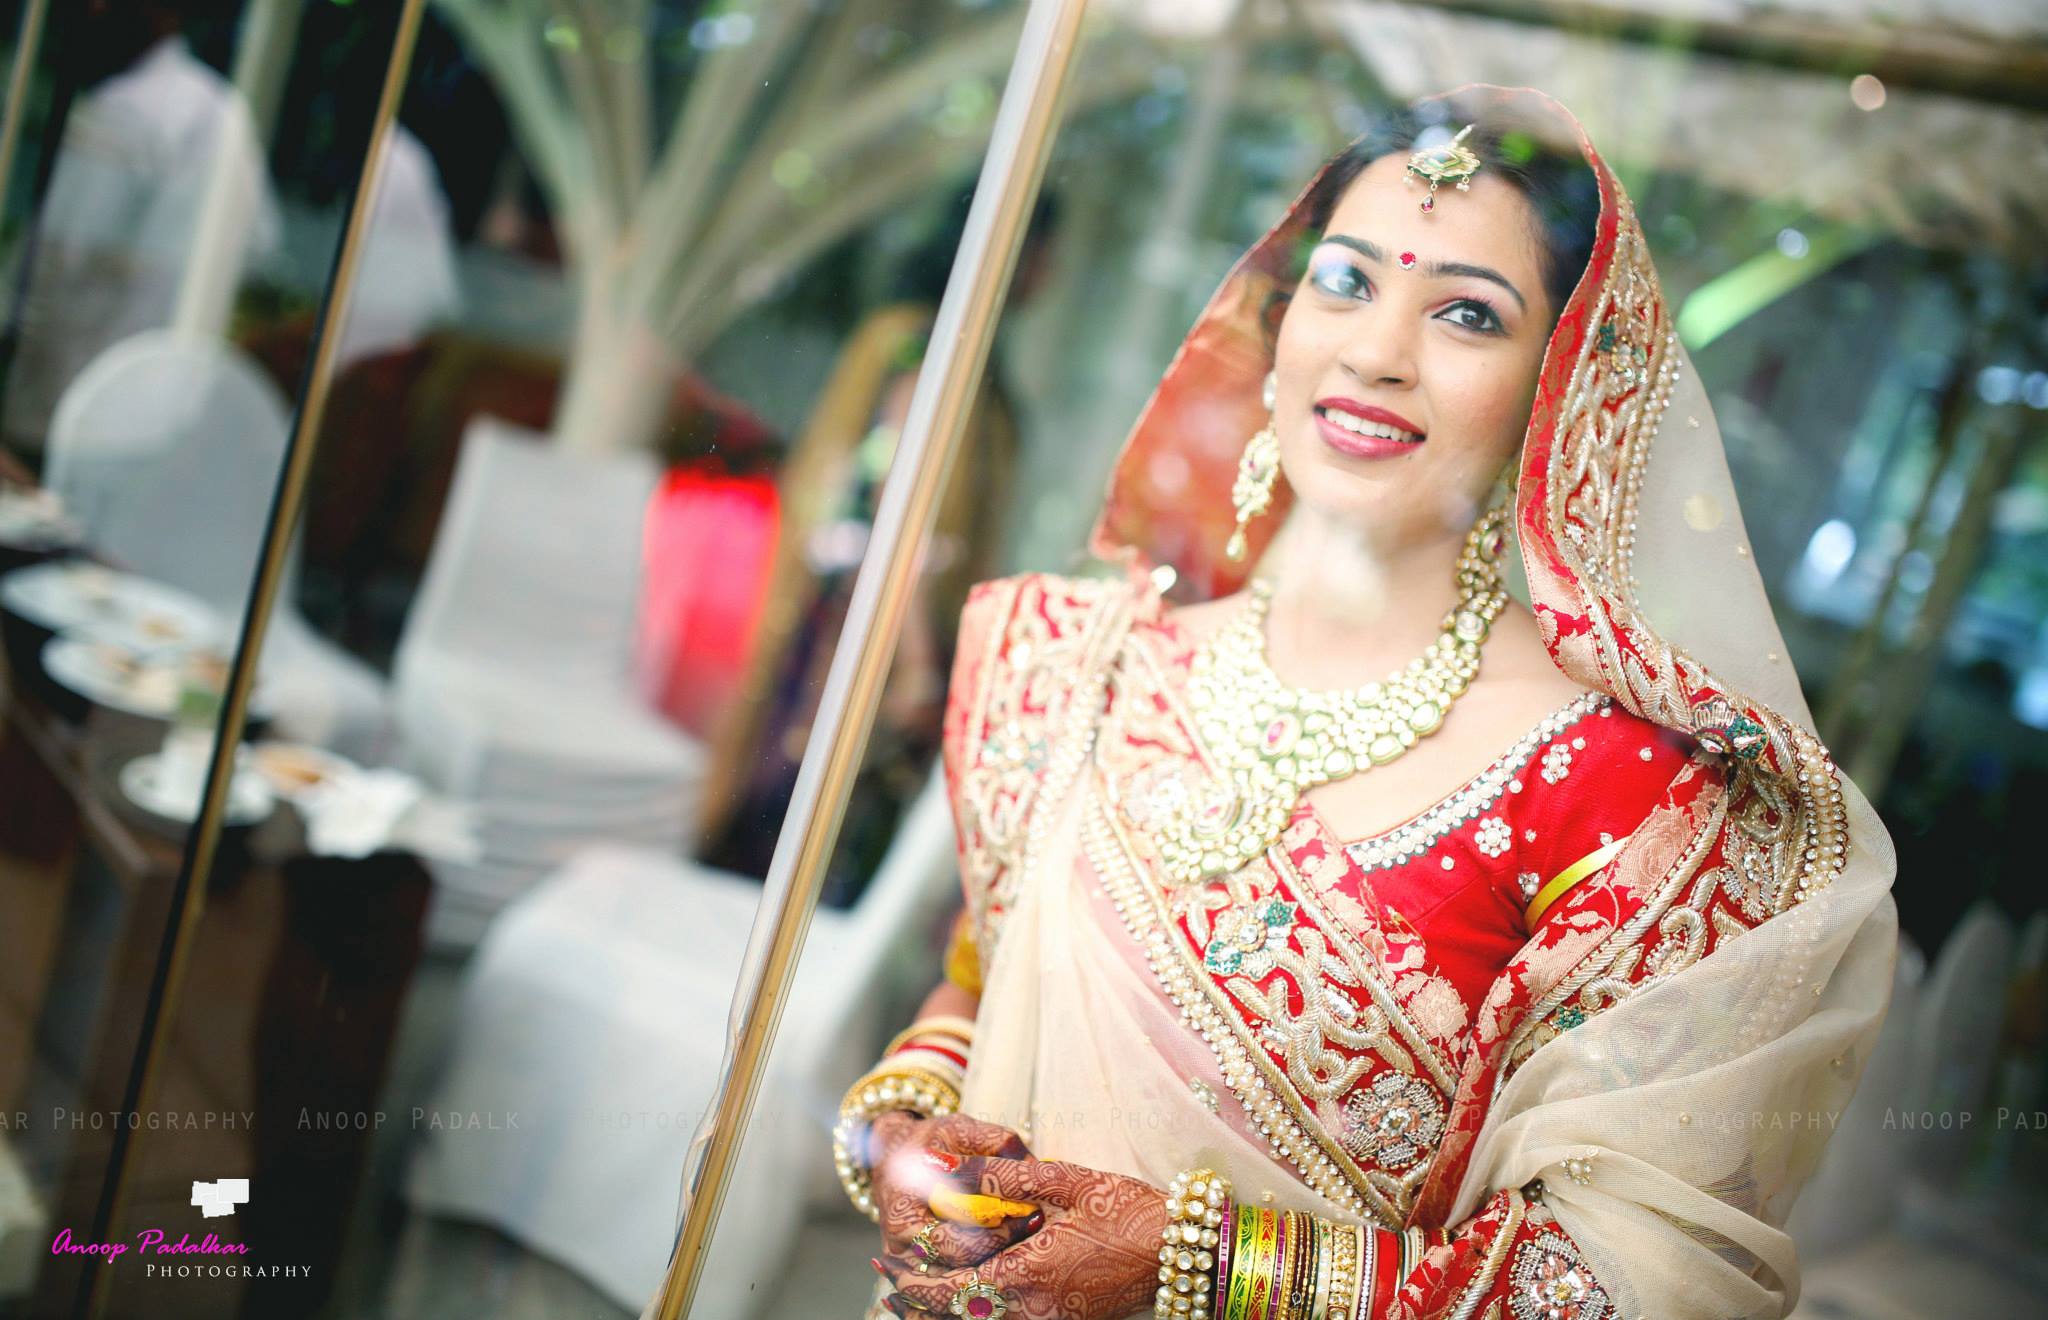 5 Inspiring Looks: Real Indian Brides And Their Stunning Wedding Sarees